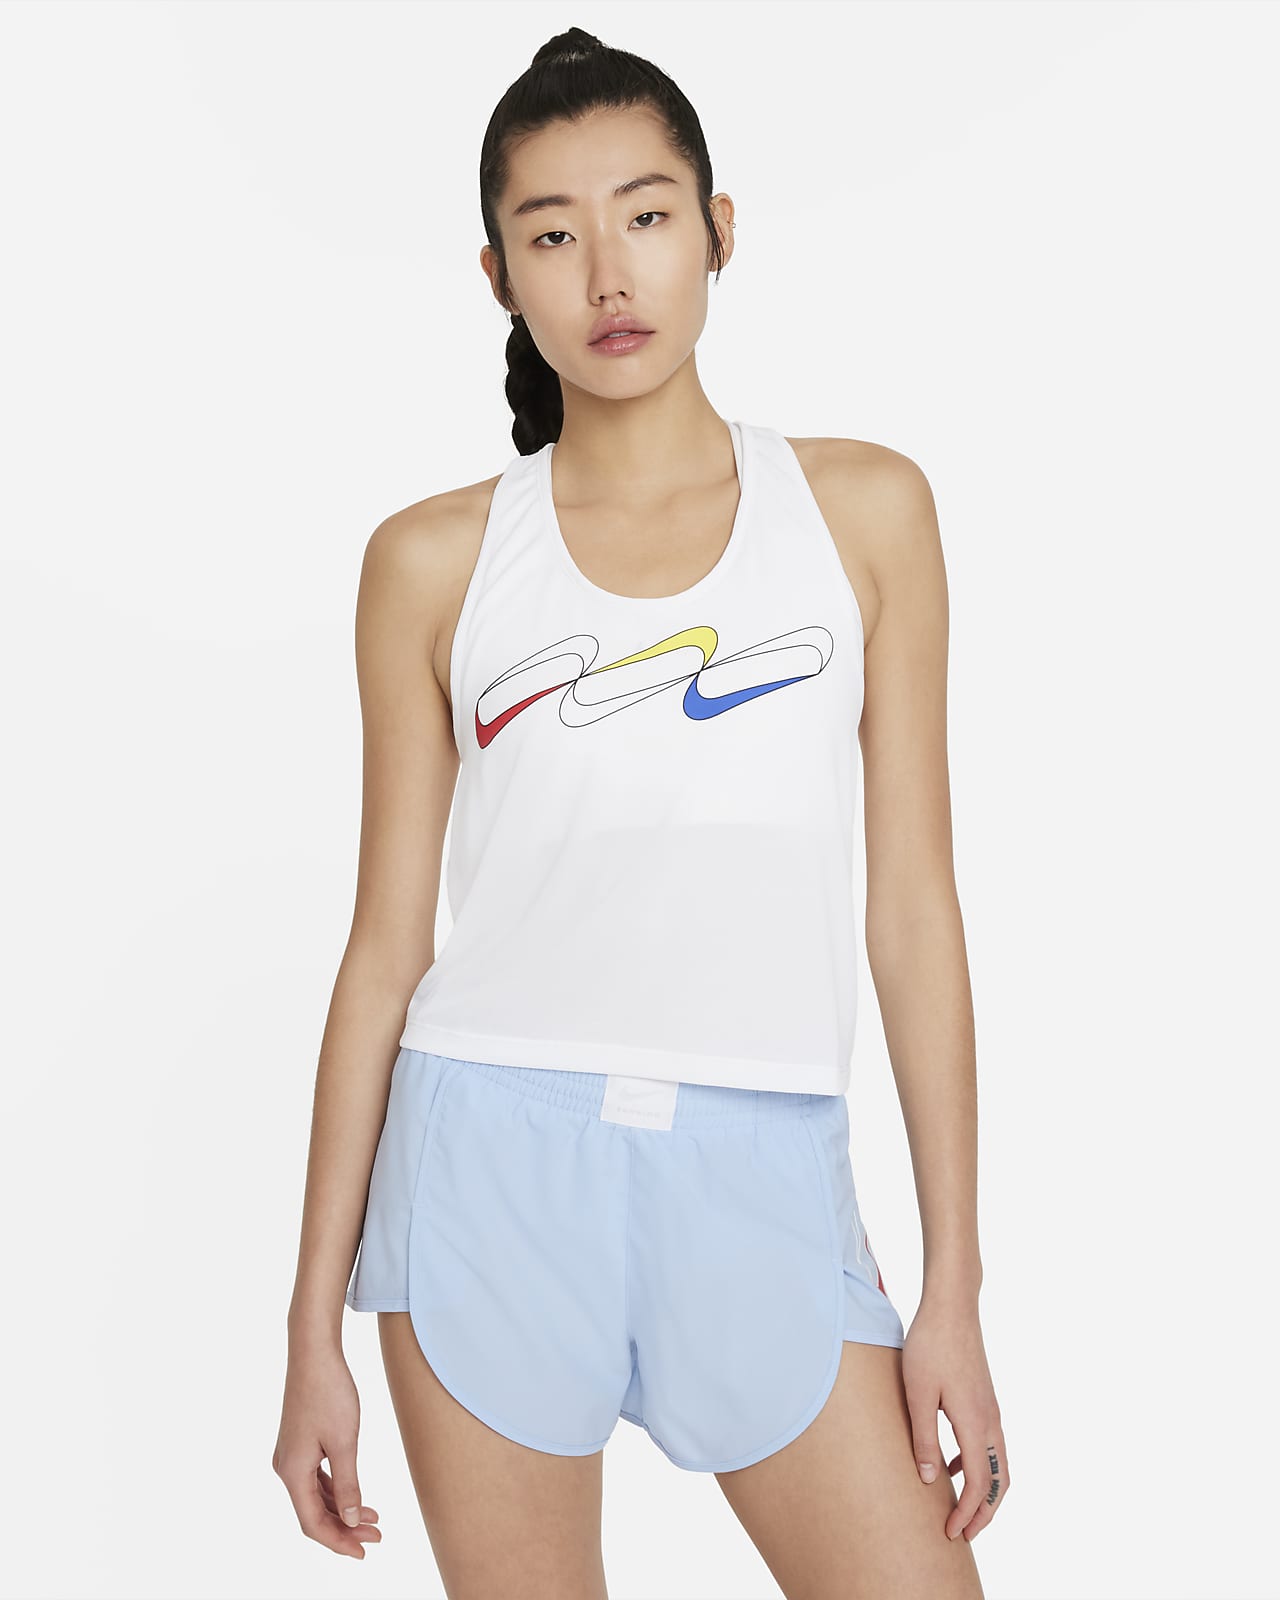 Nike Dri-FIT Retro 女款跑步無袖上衣